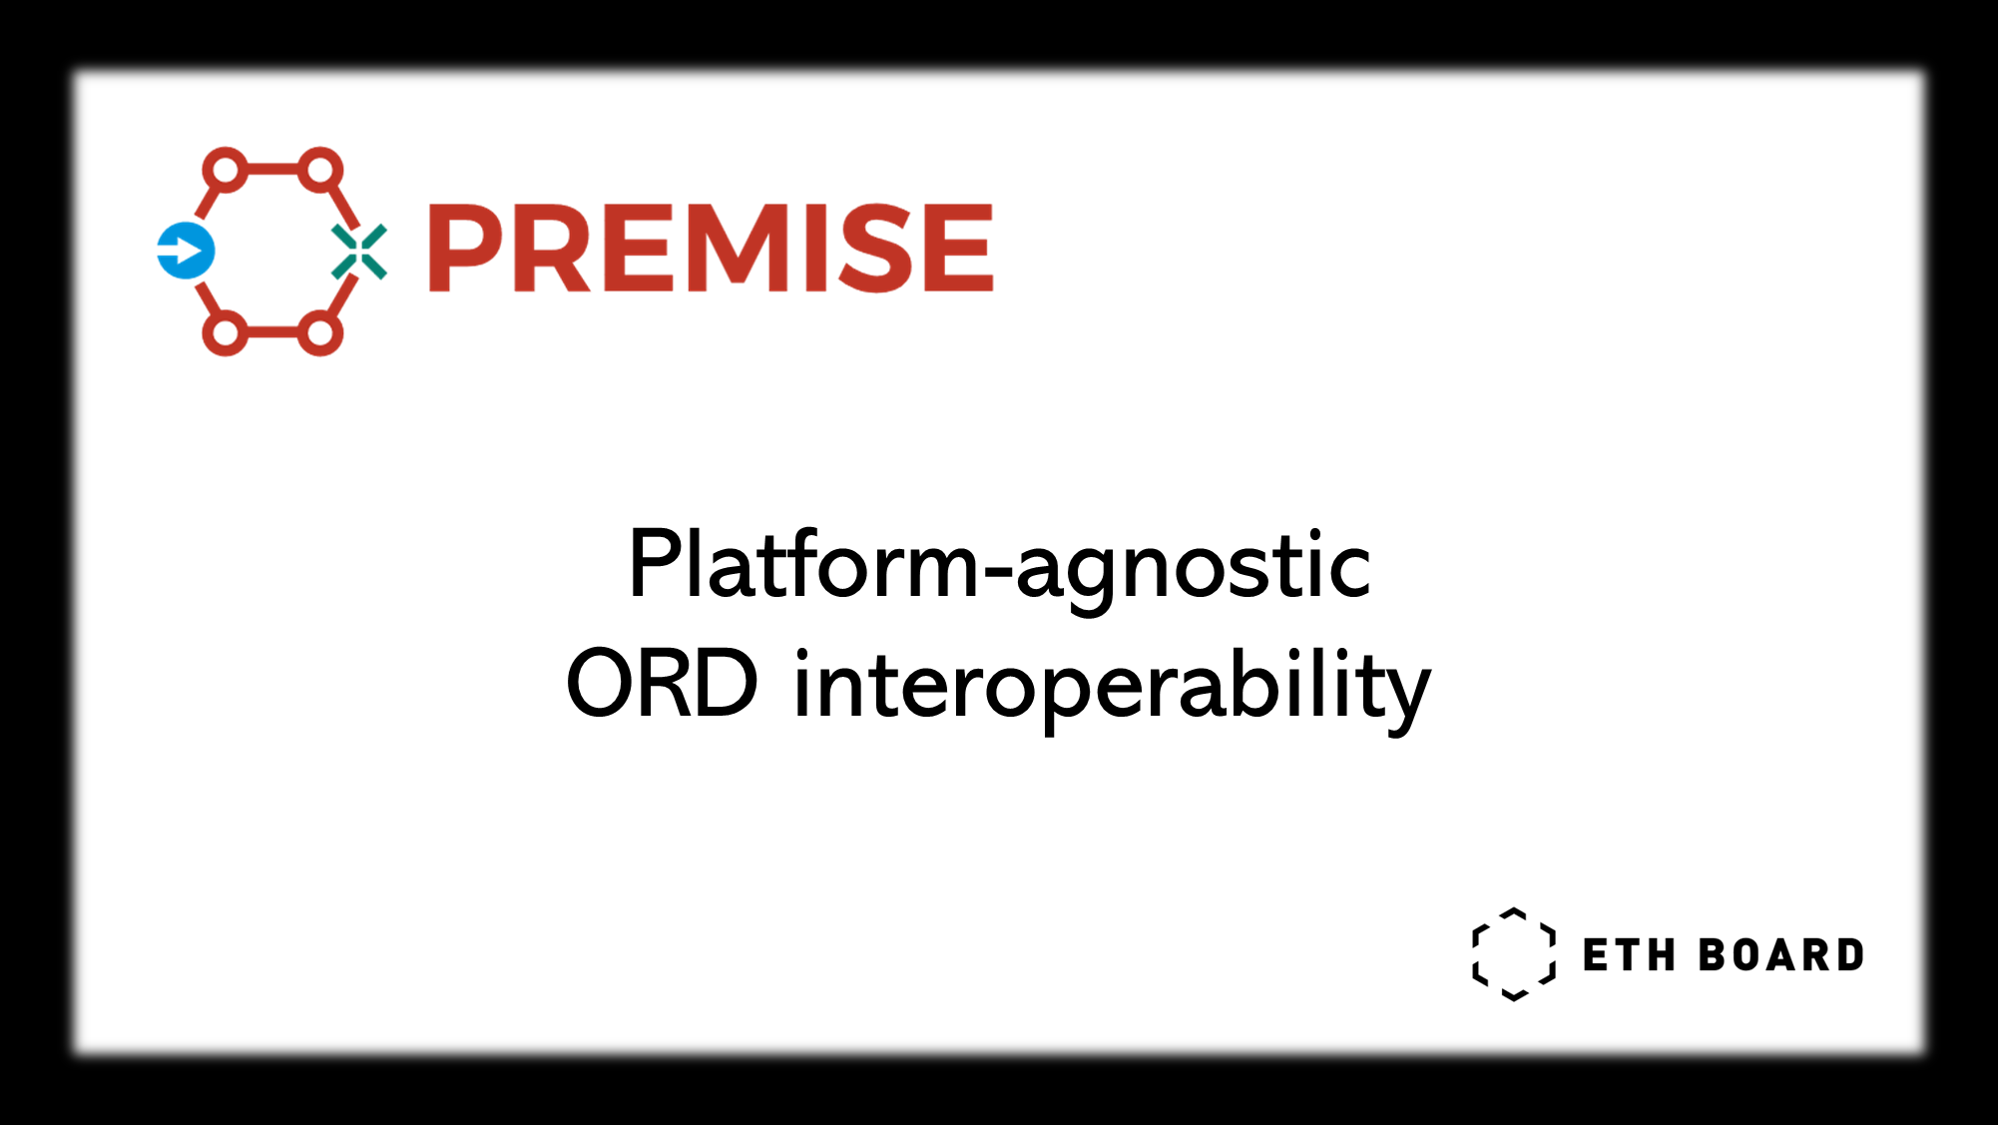 Platform-agnostic ORD interoperability